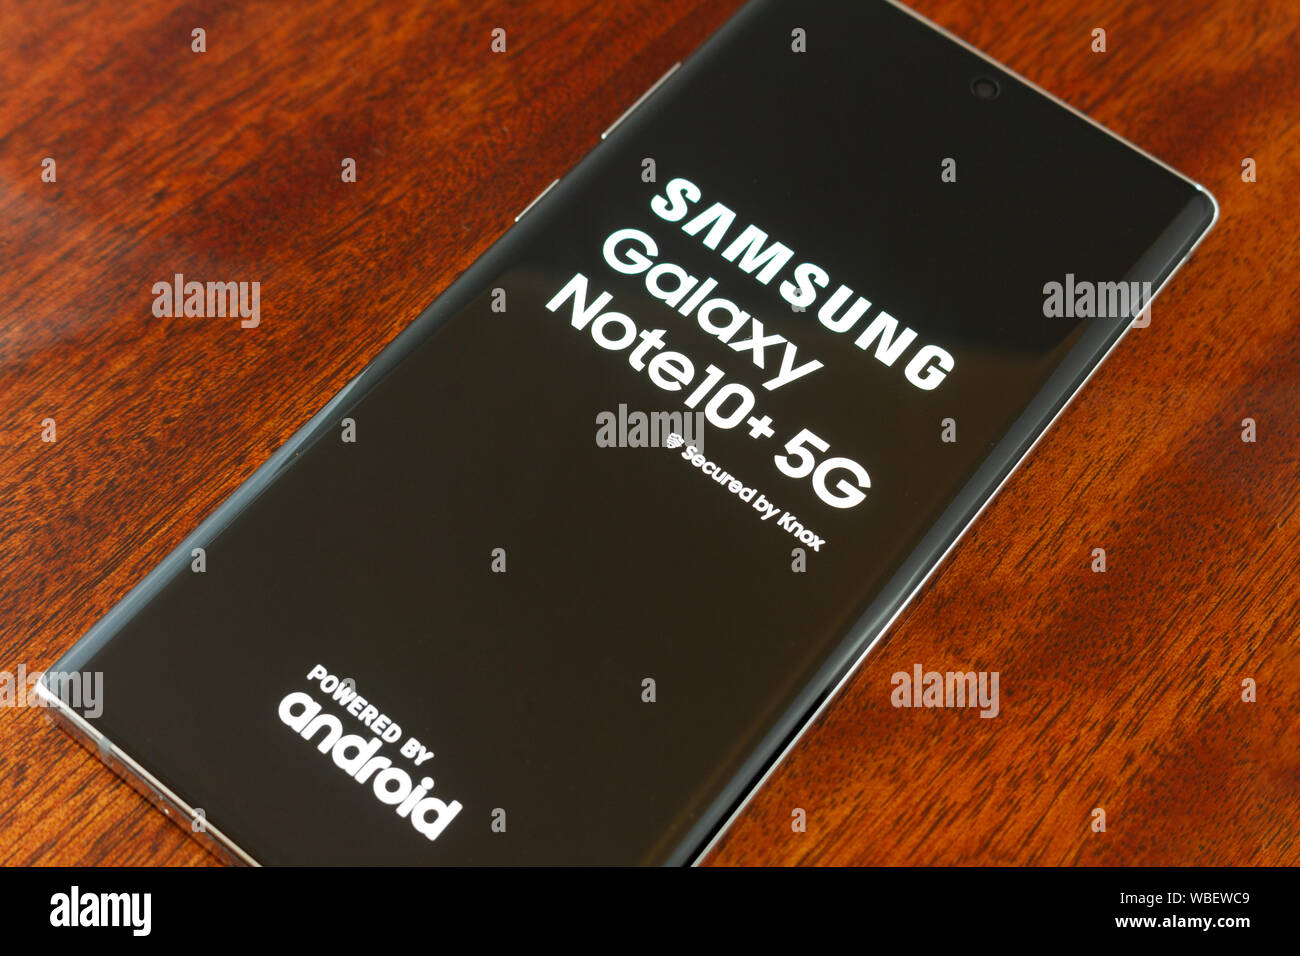 Device Help, Samsung Galaxy Note 10+ 5G